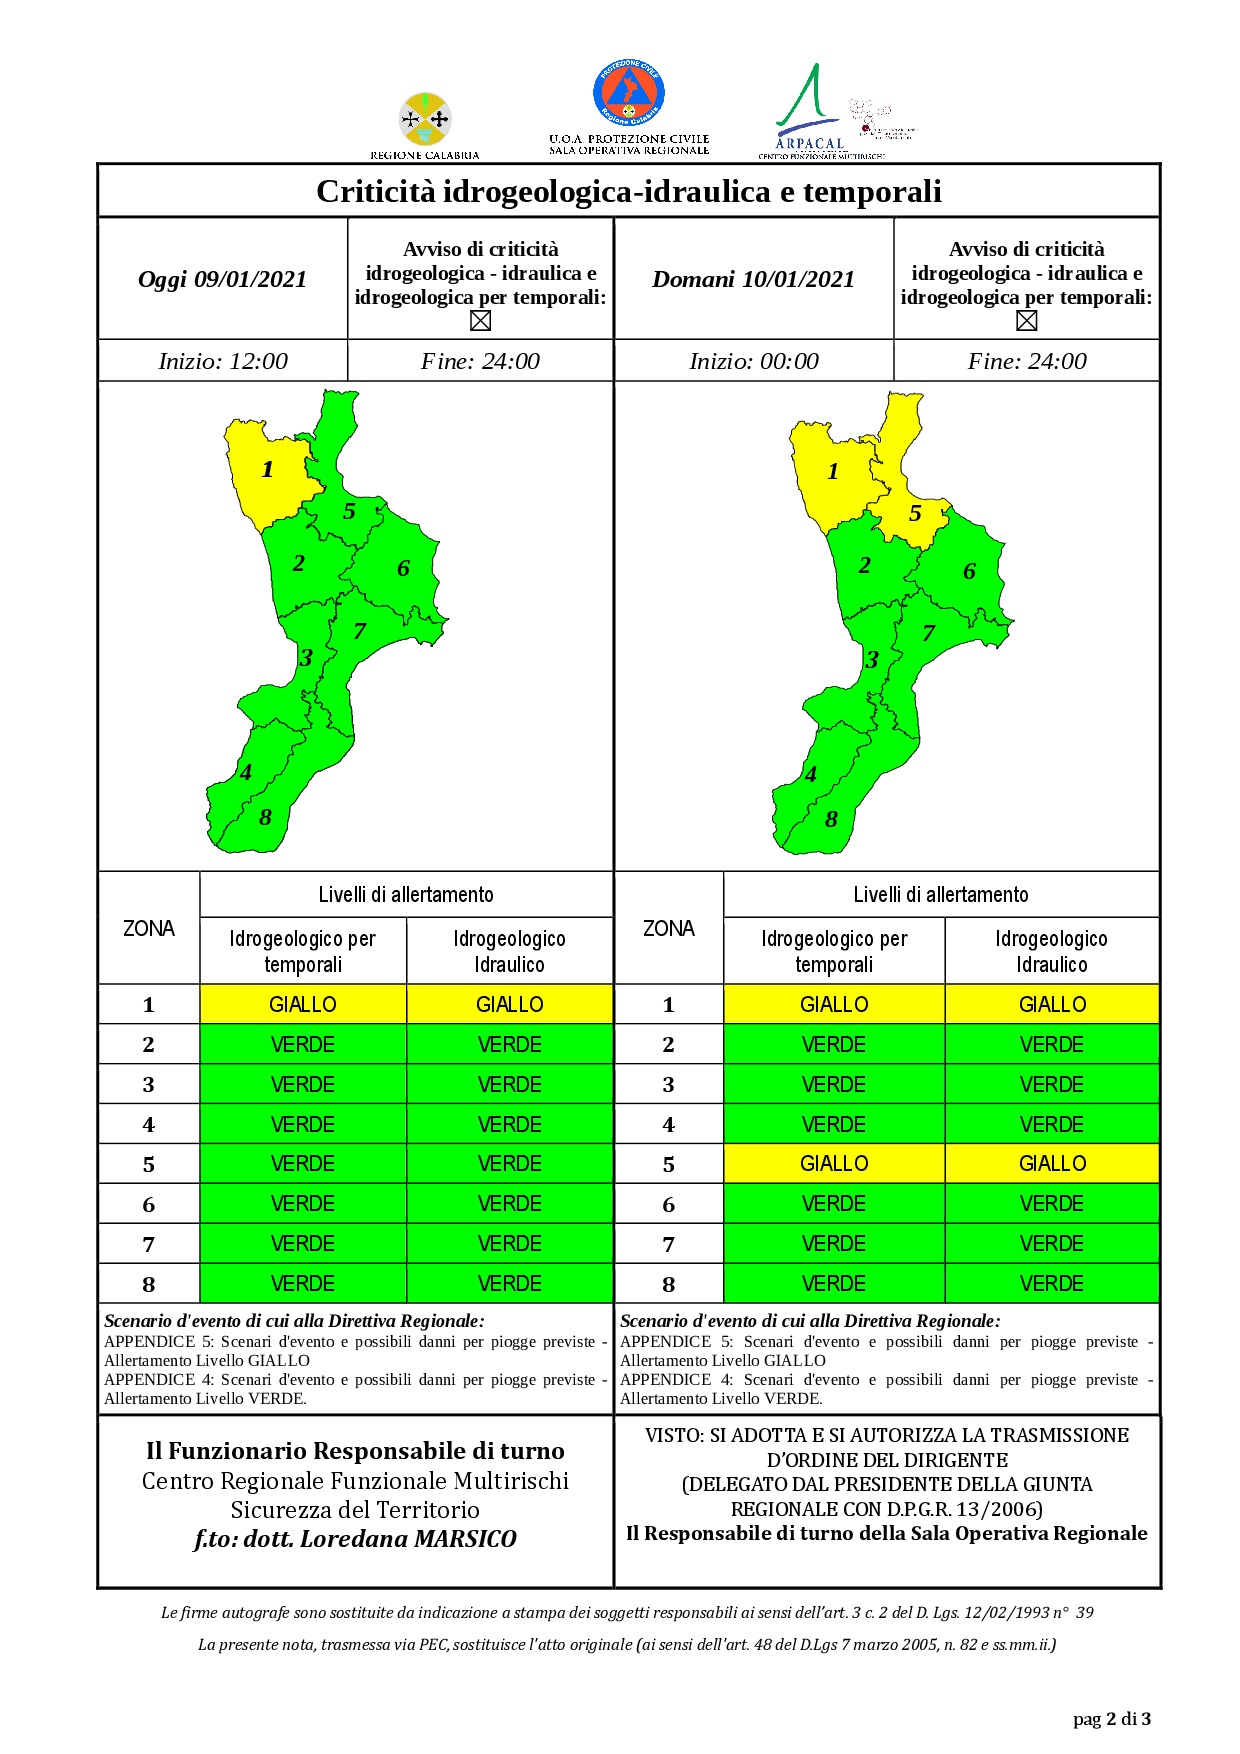 Criticità idrogeologica-idraulica e temporali in Calabria 09-01-2021